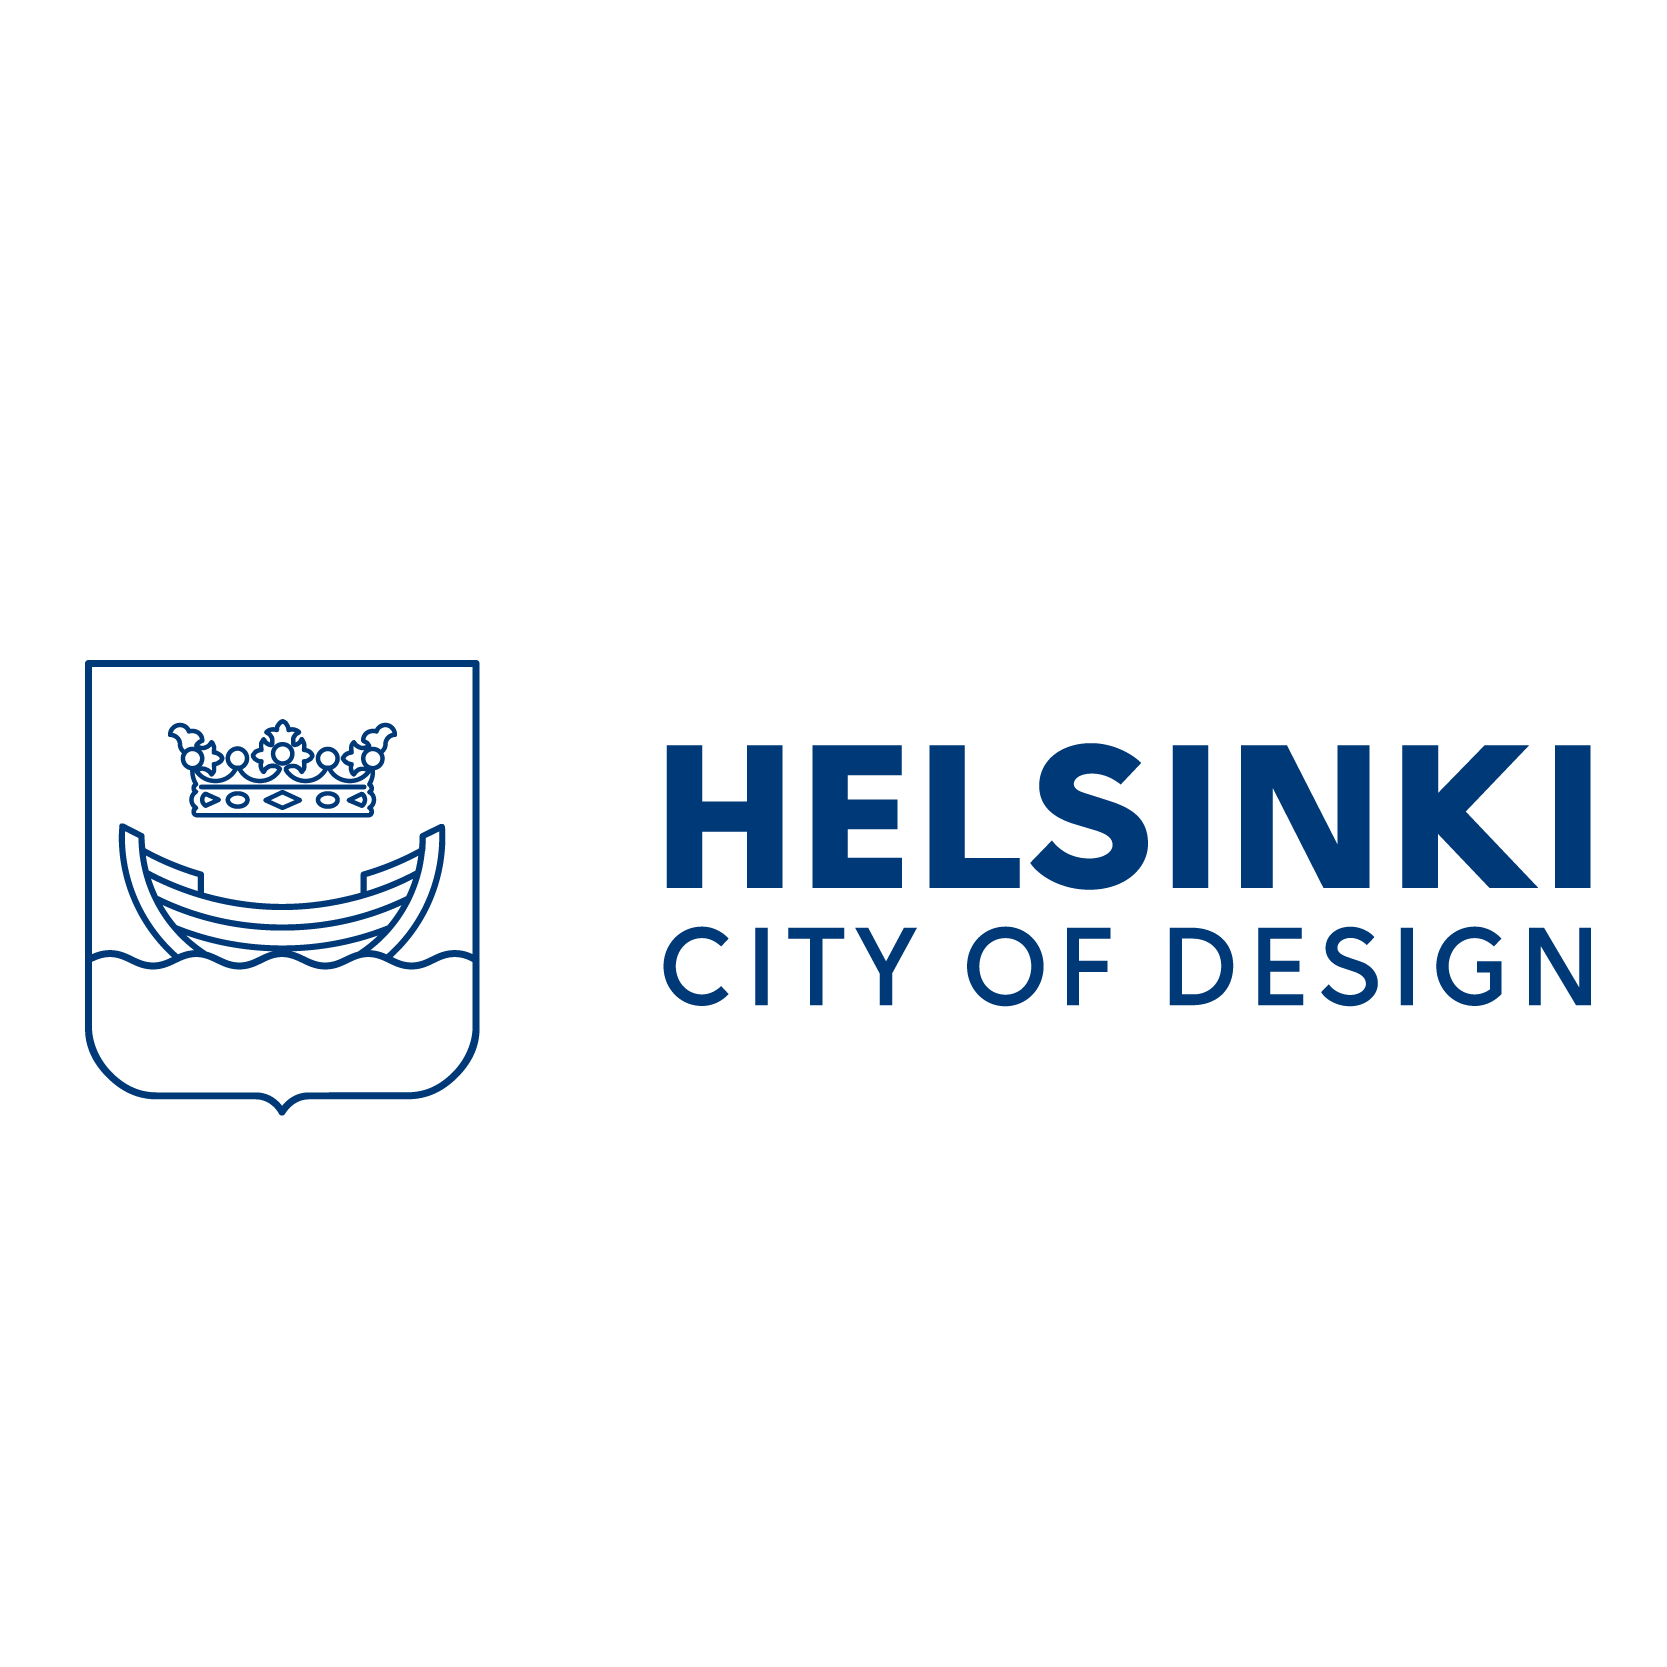 Helsinki, City of Design